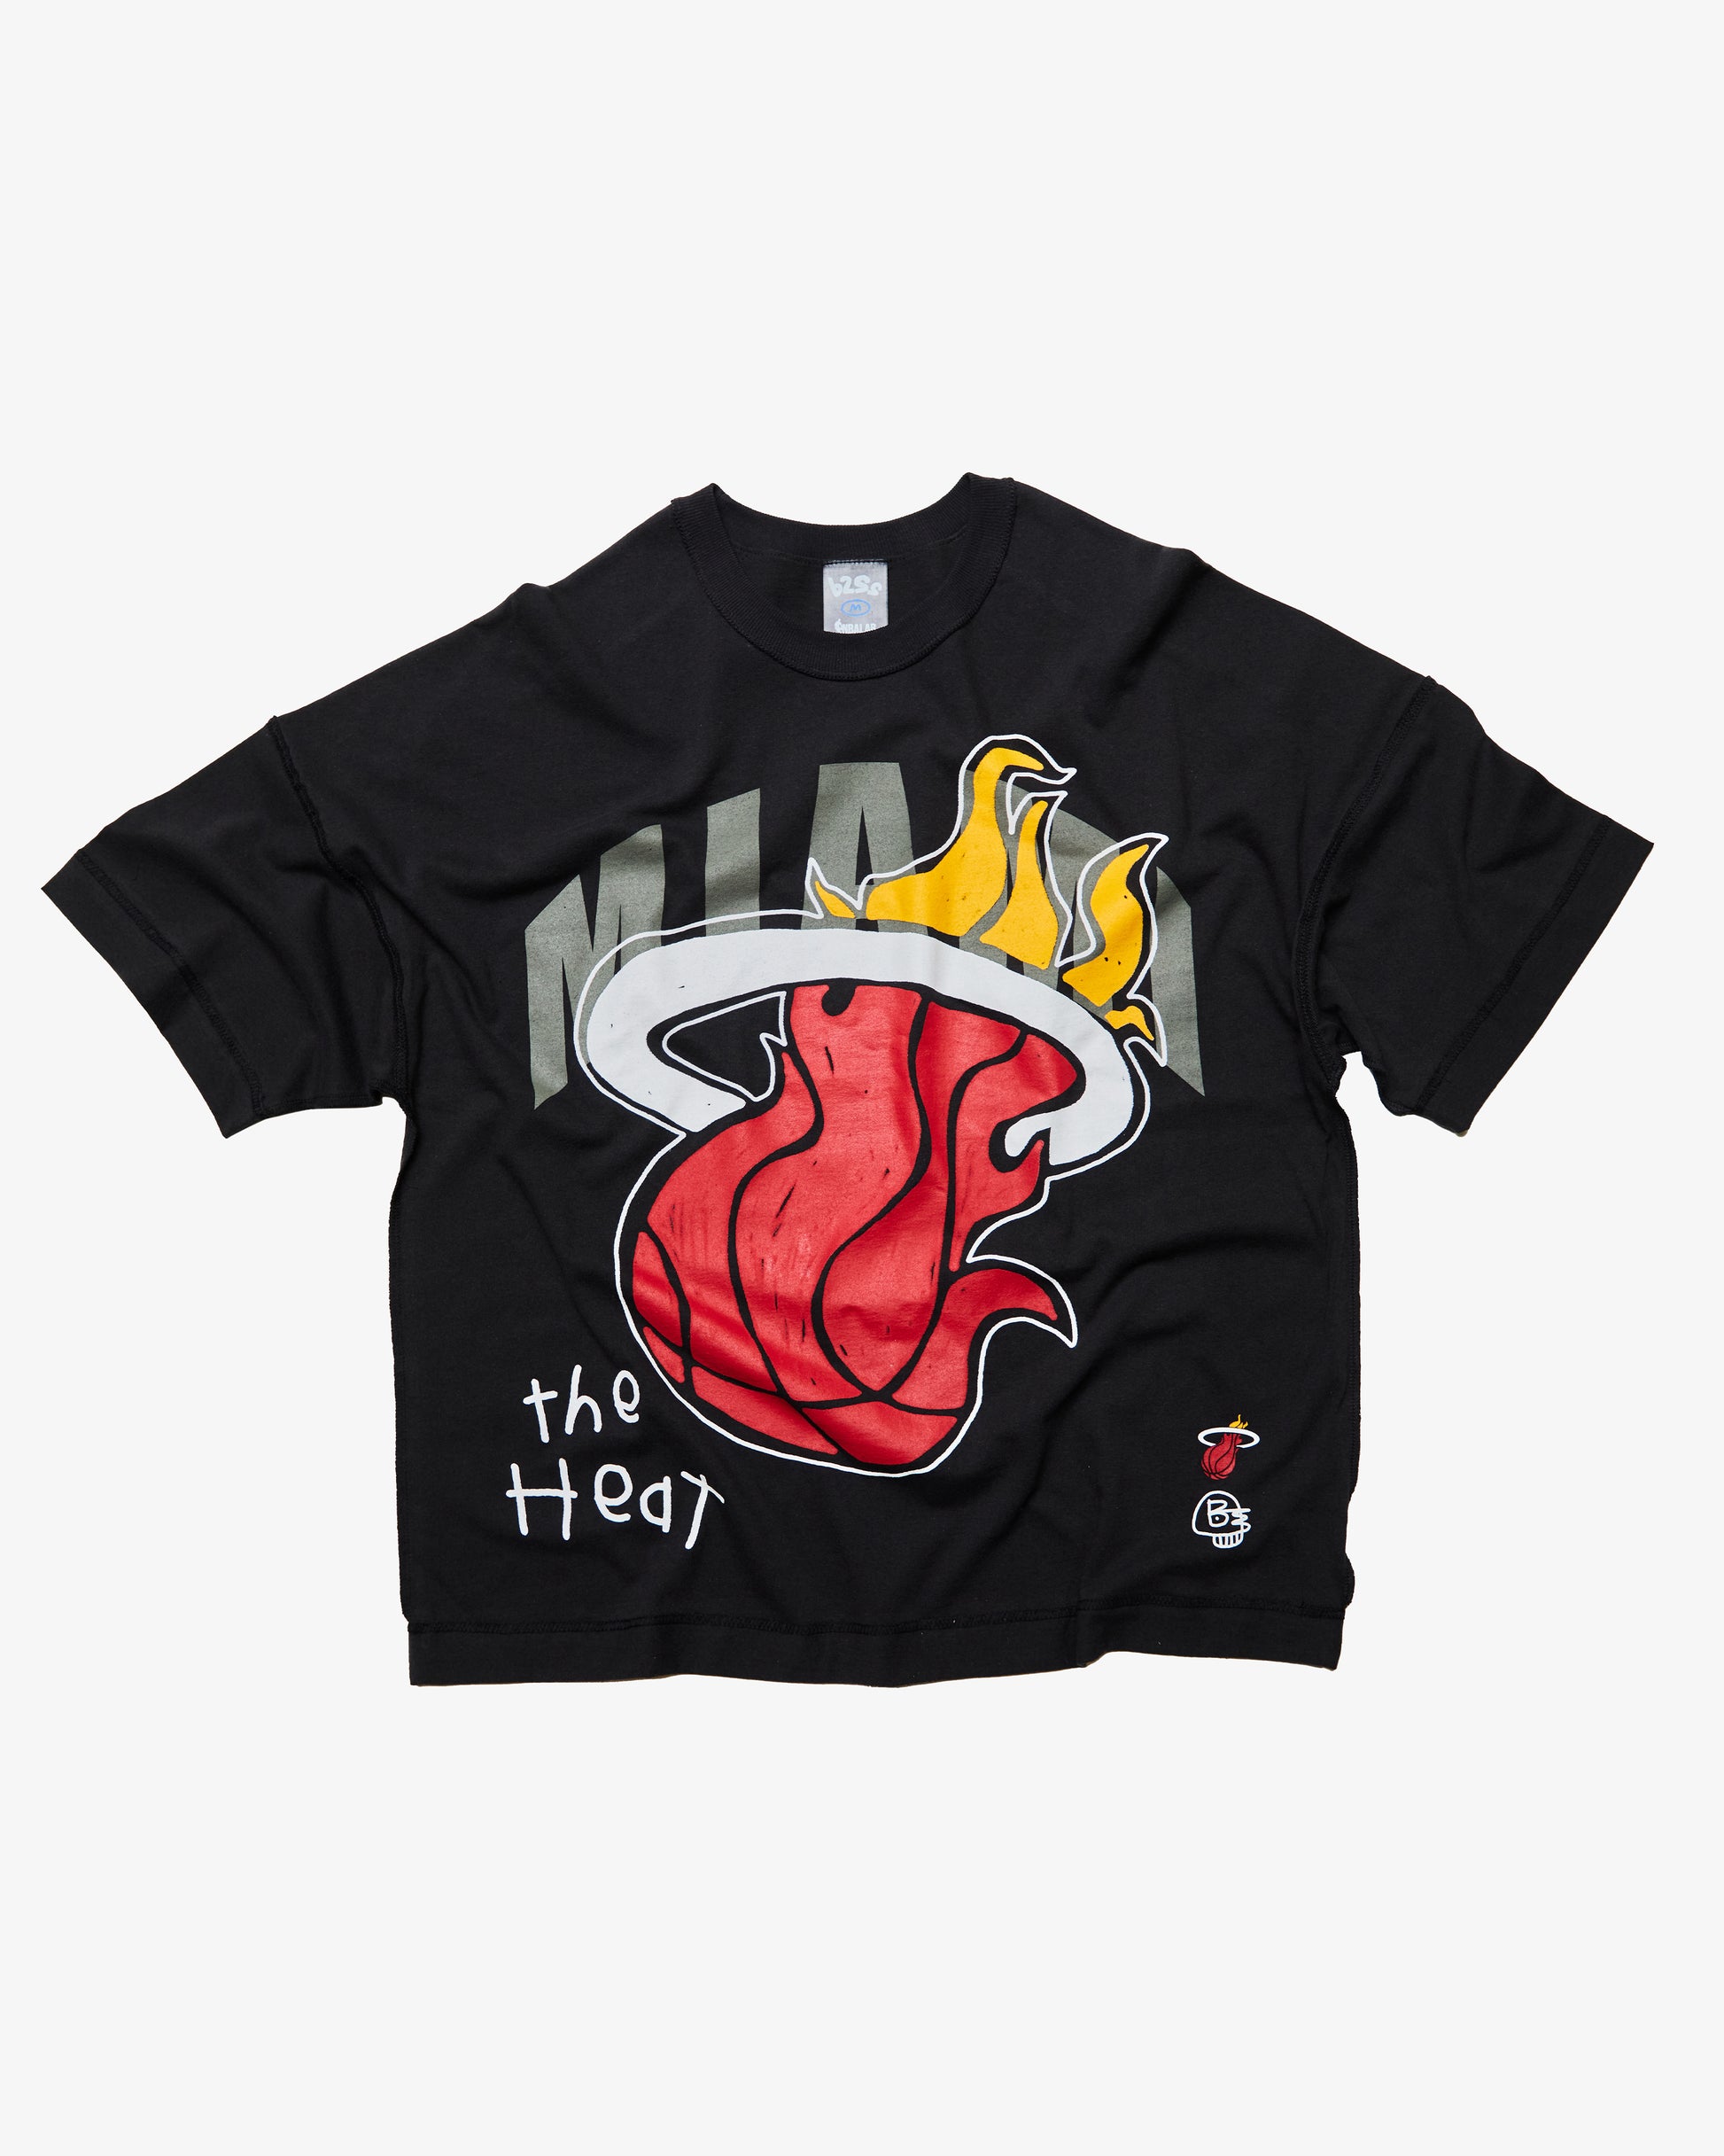 Miami Heat NBA License T Shirt